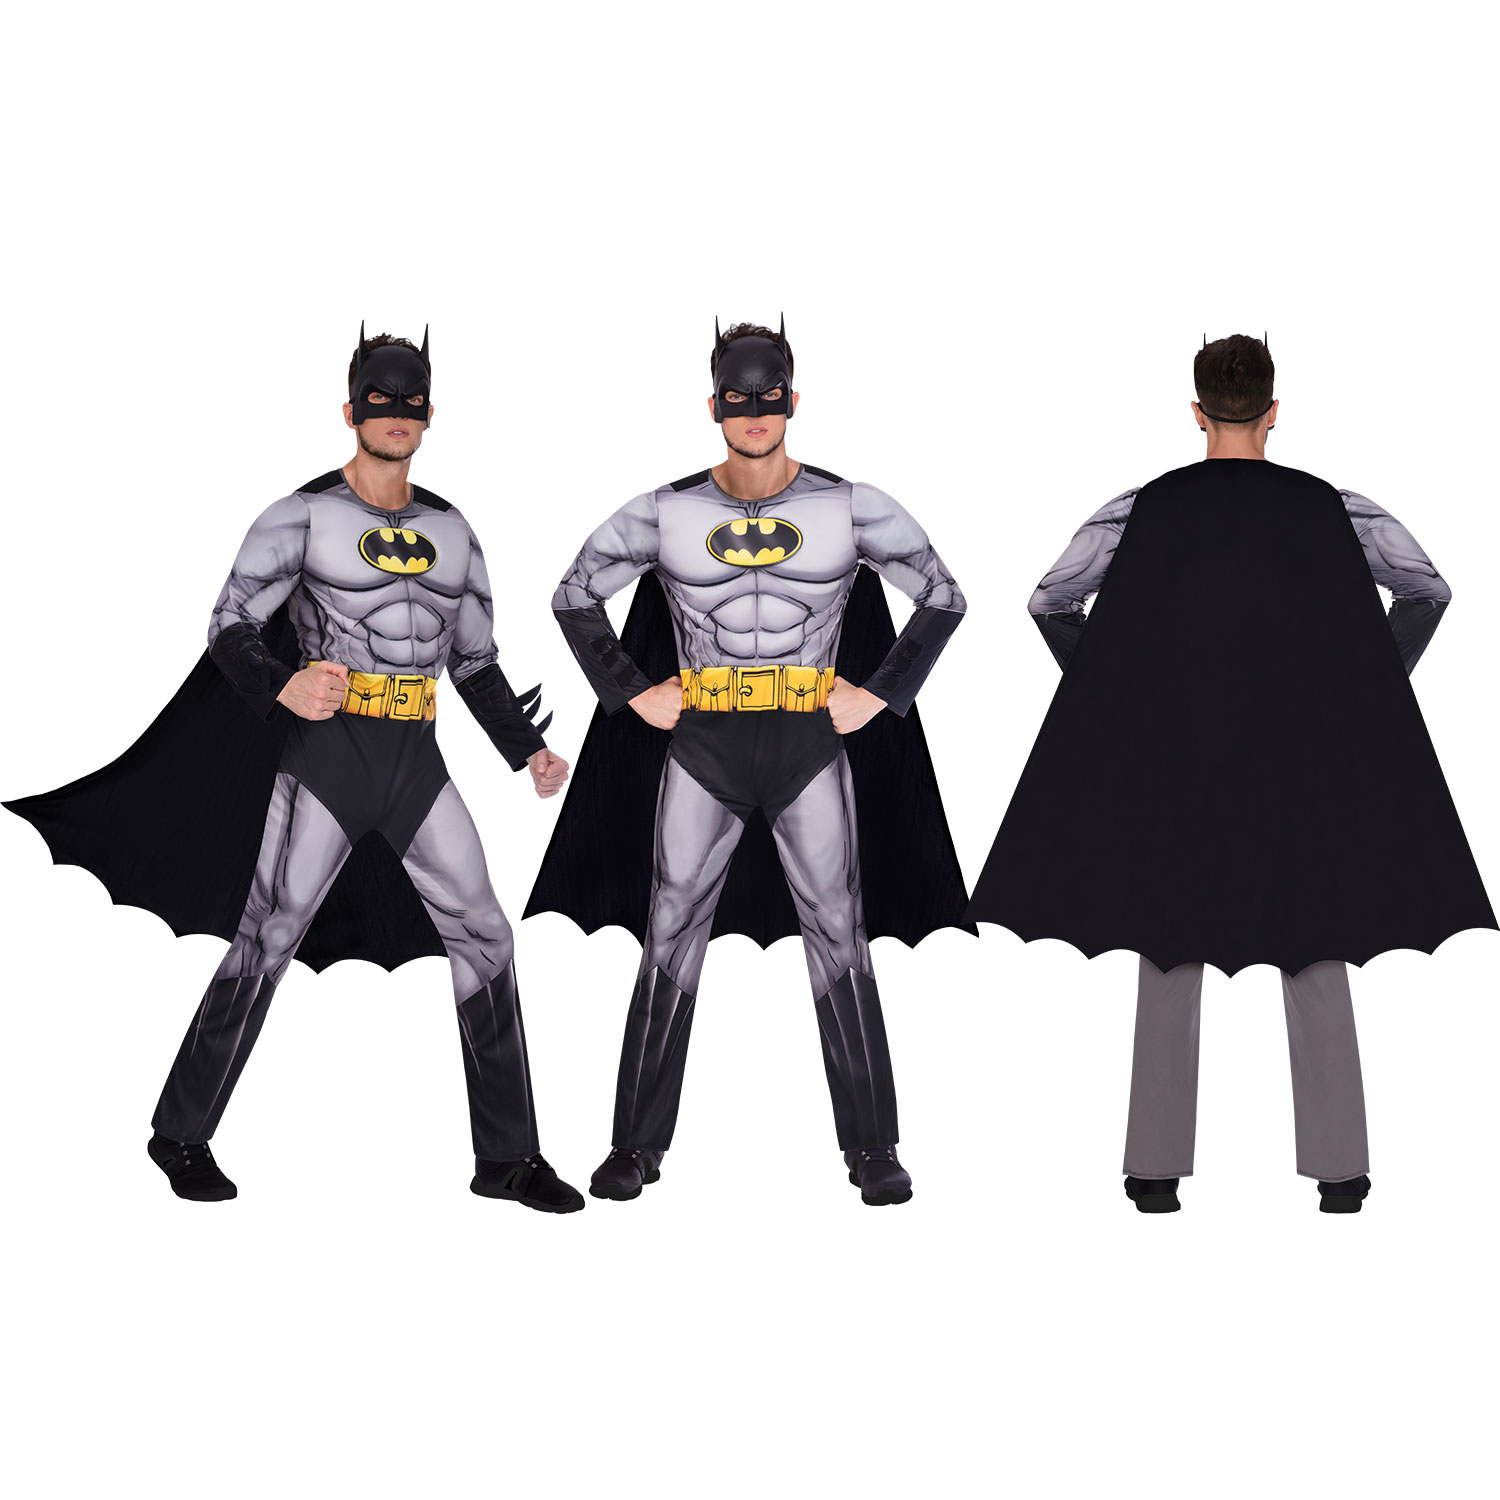 Batman Classic Costume - Size Large - 1 PC : Amscan International